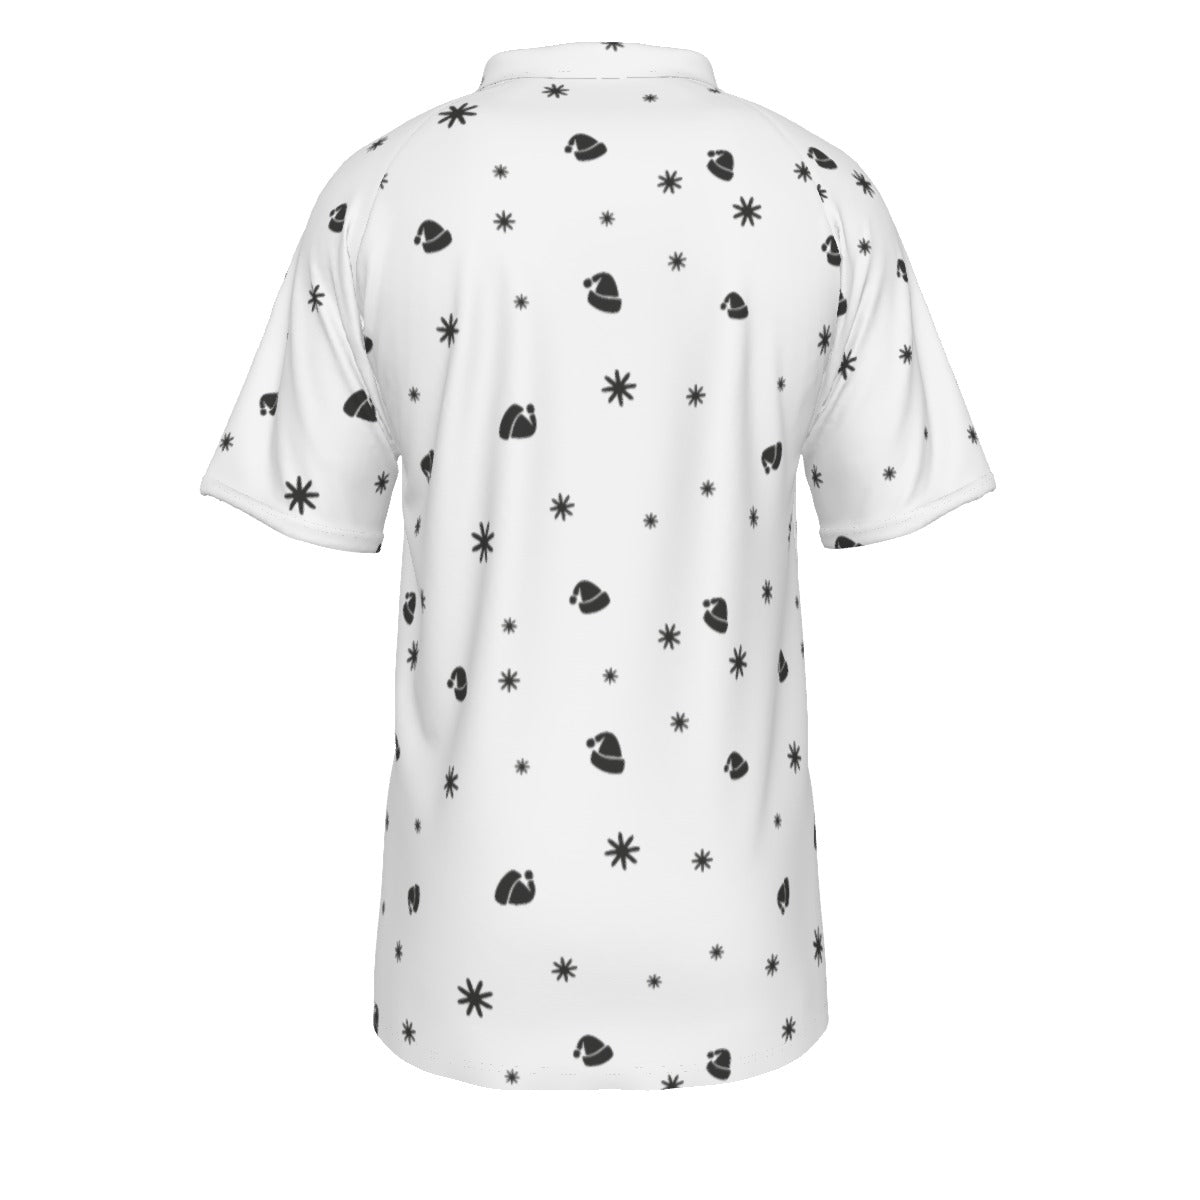 Men's Short Sleeve Christmas Polo Shirt - Snowflakes and Hats